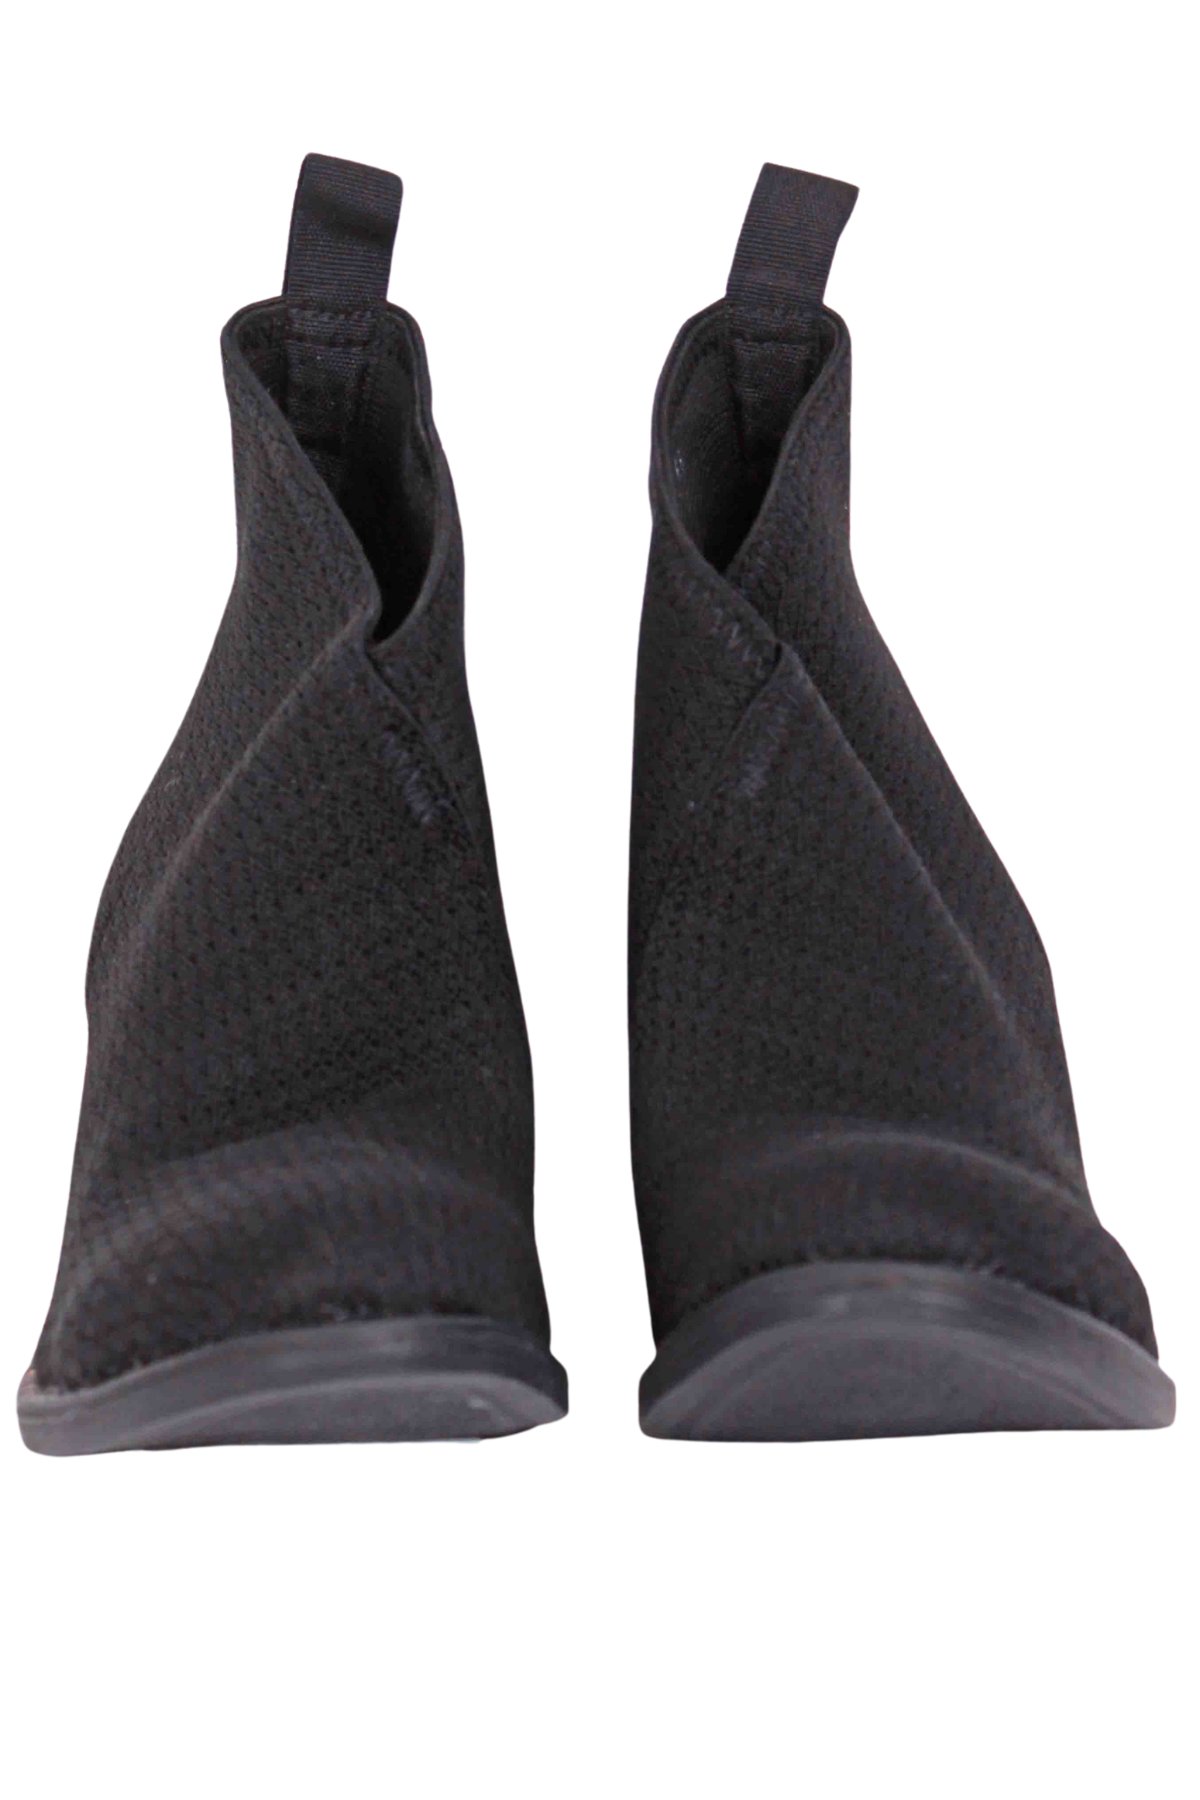 Black Woven Barcelona boot by Charleston Shoe Company